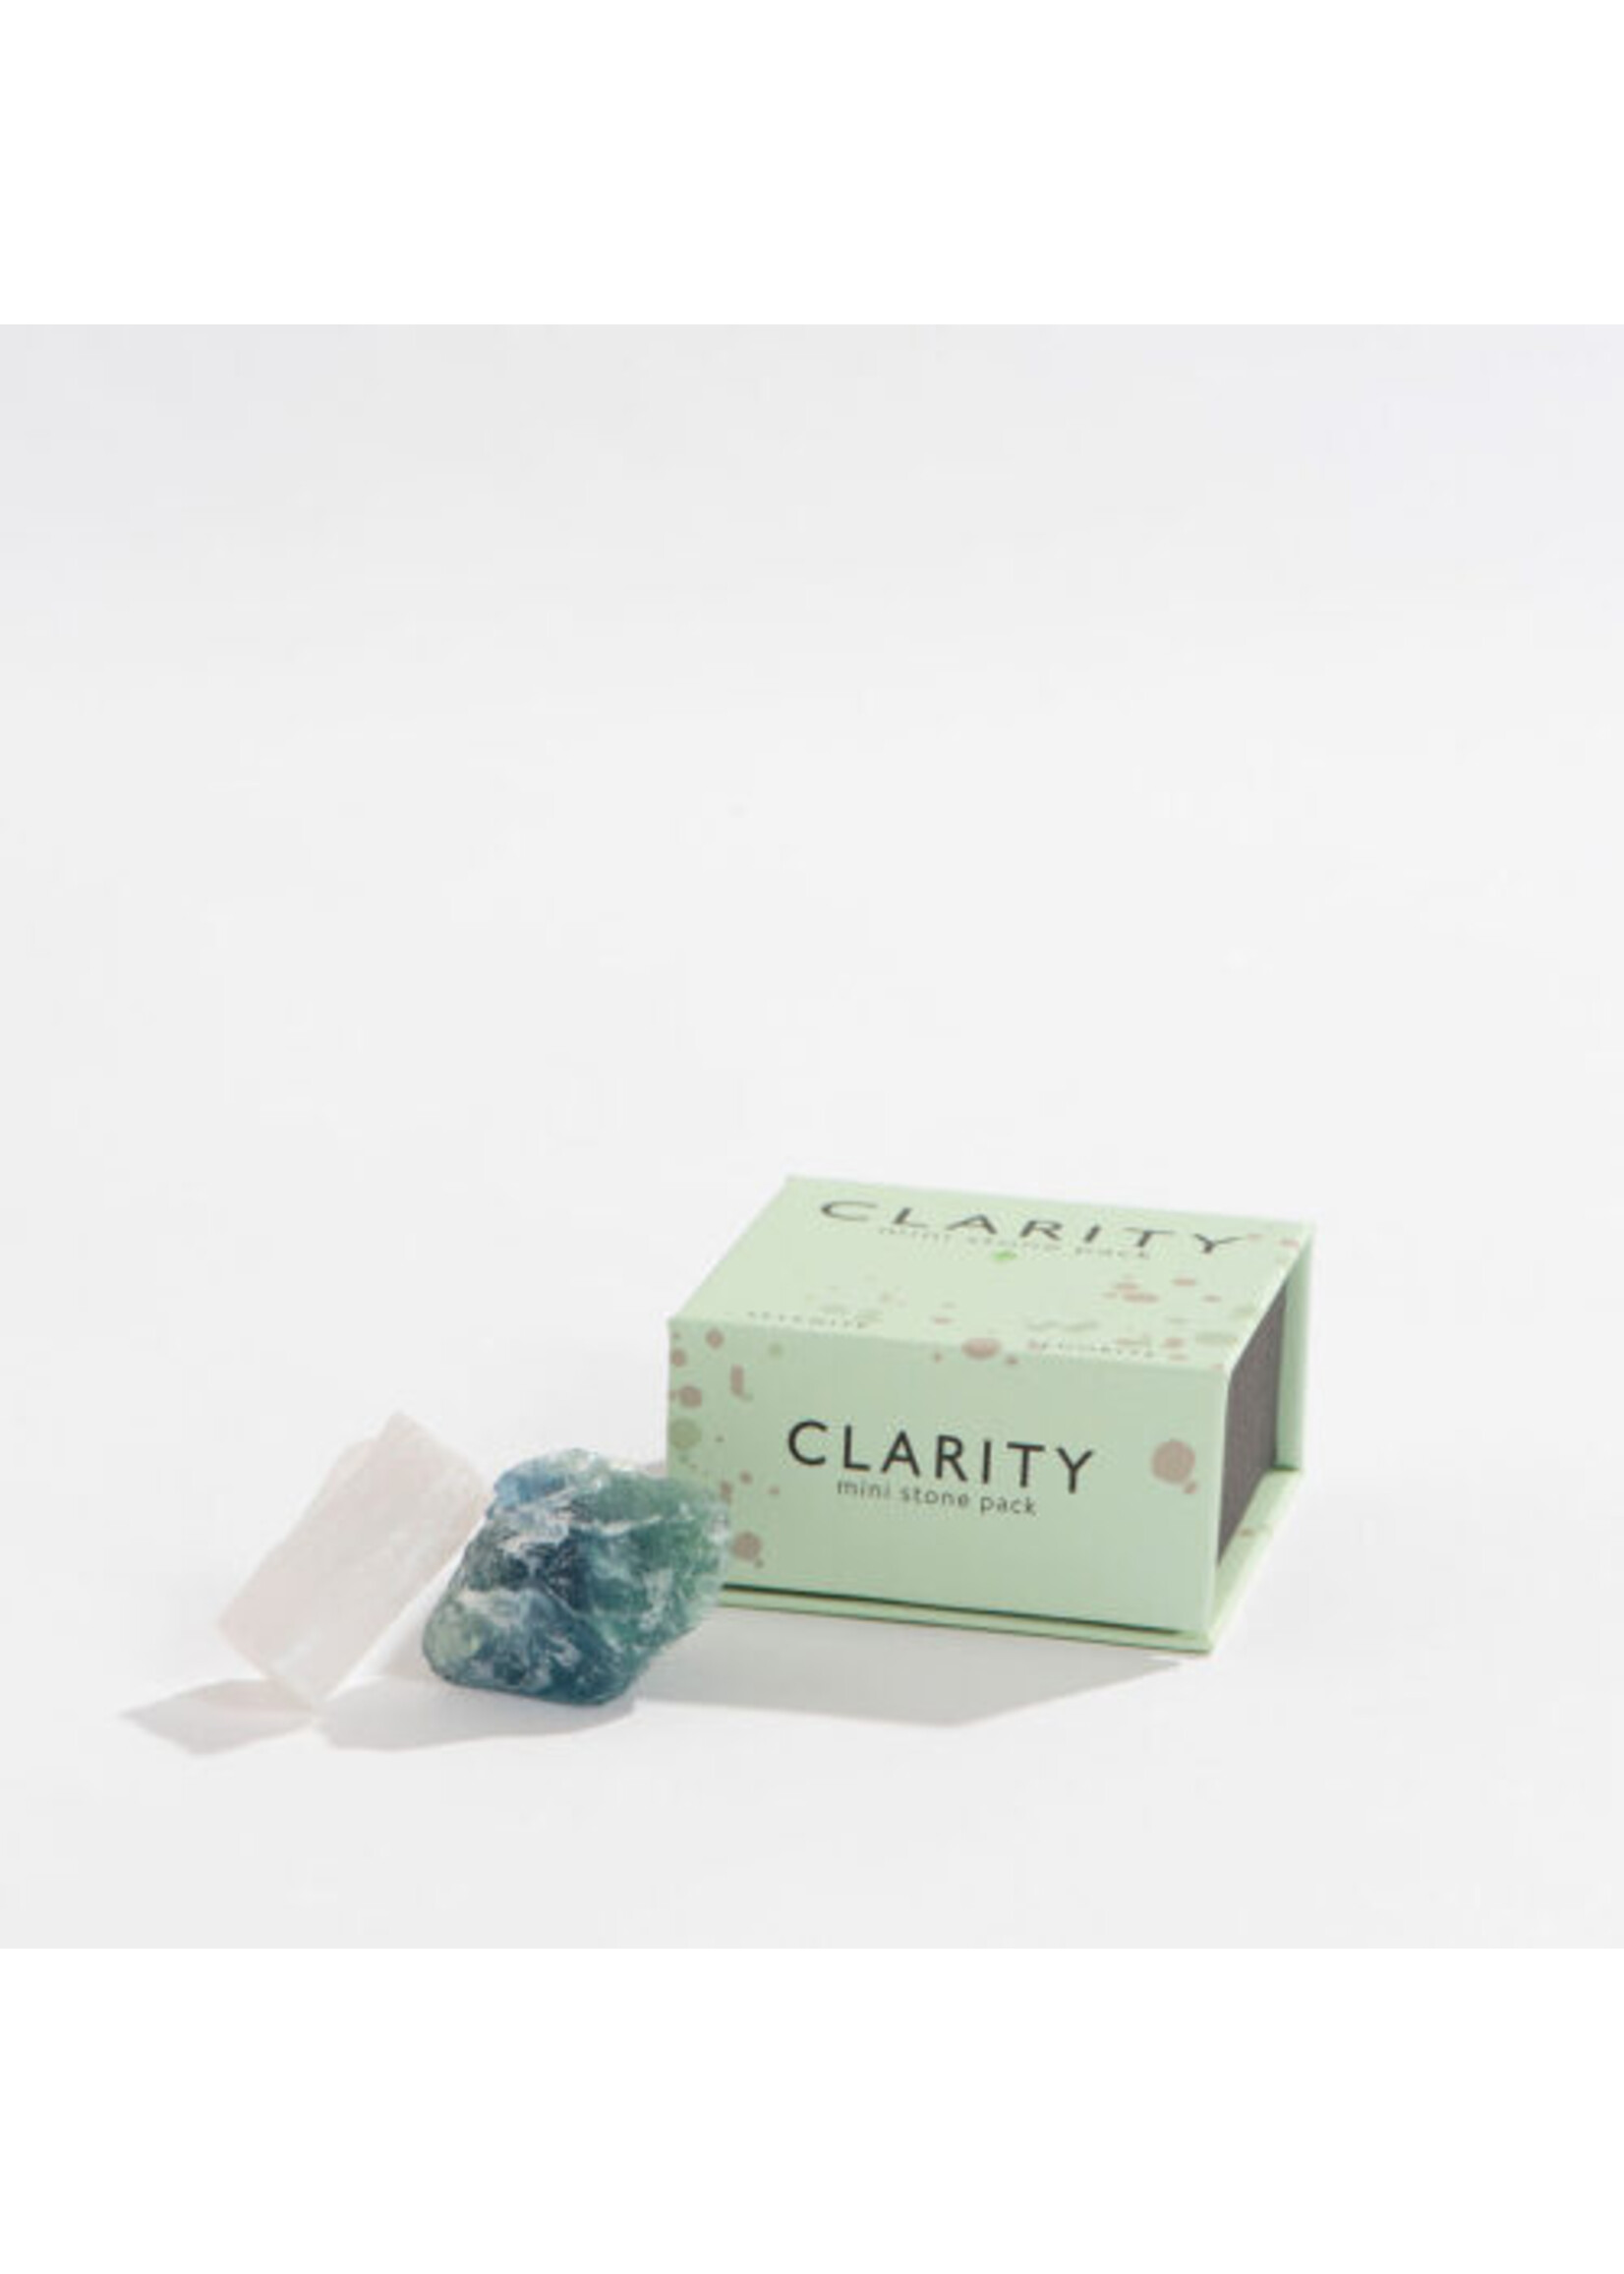 Geo Mini Stone Gift Box Clarity